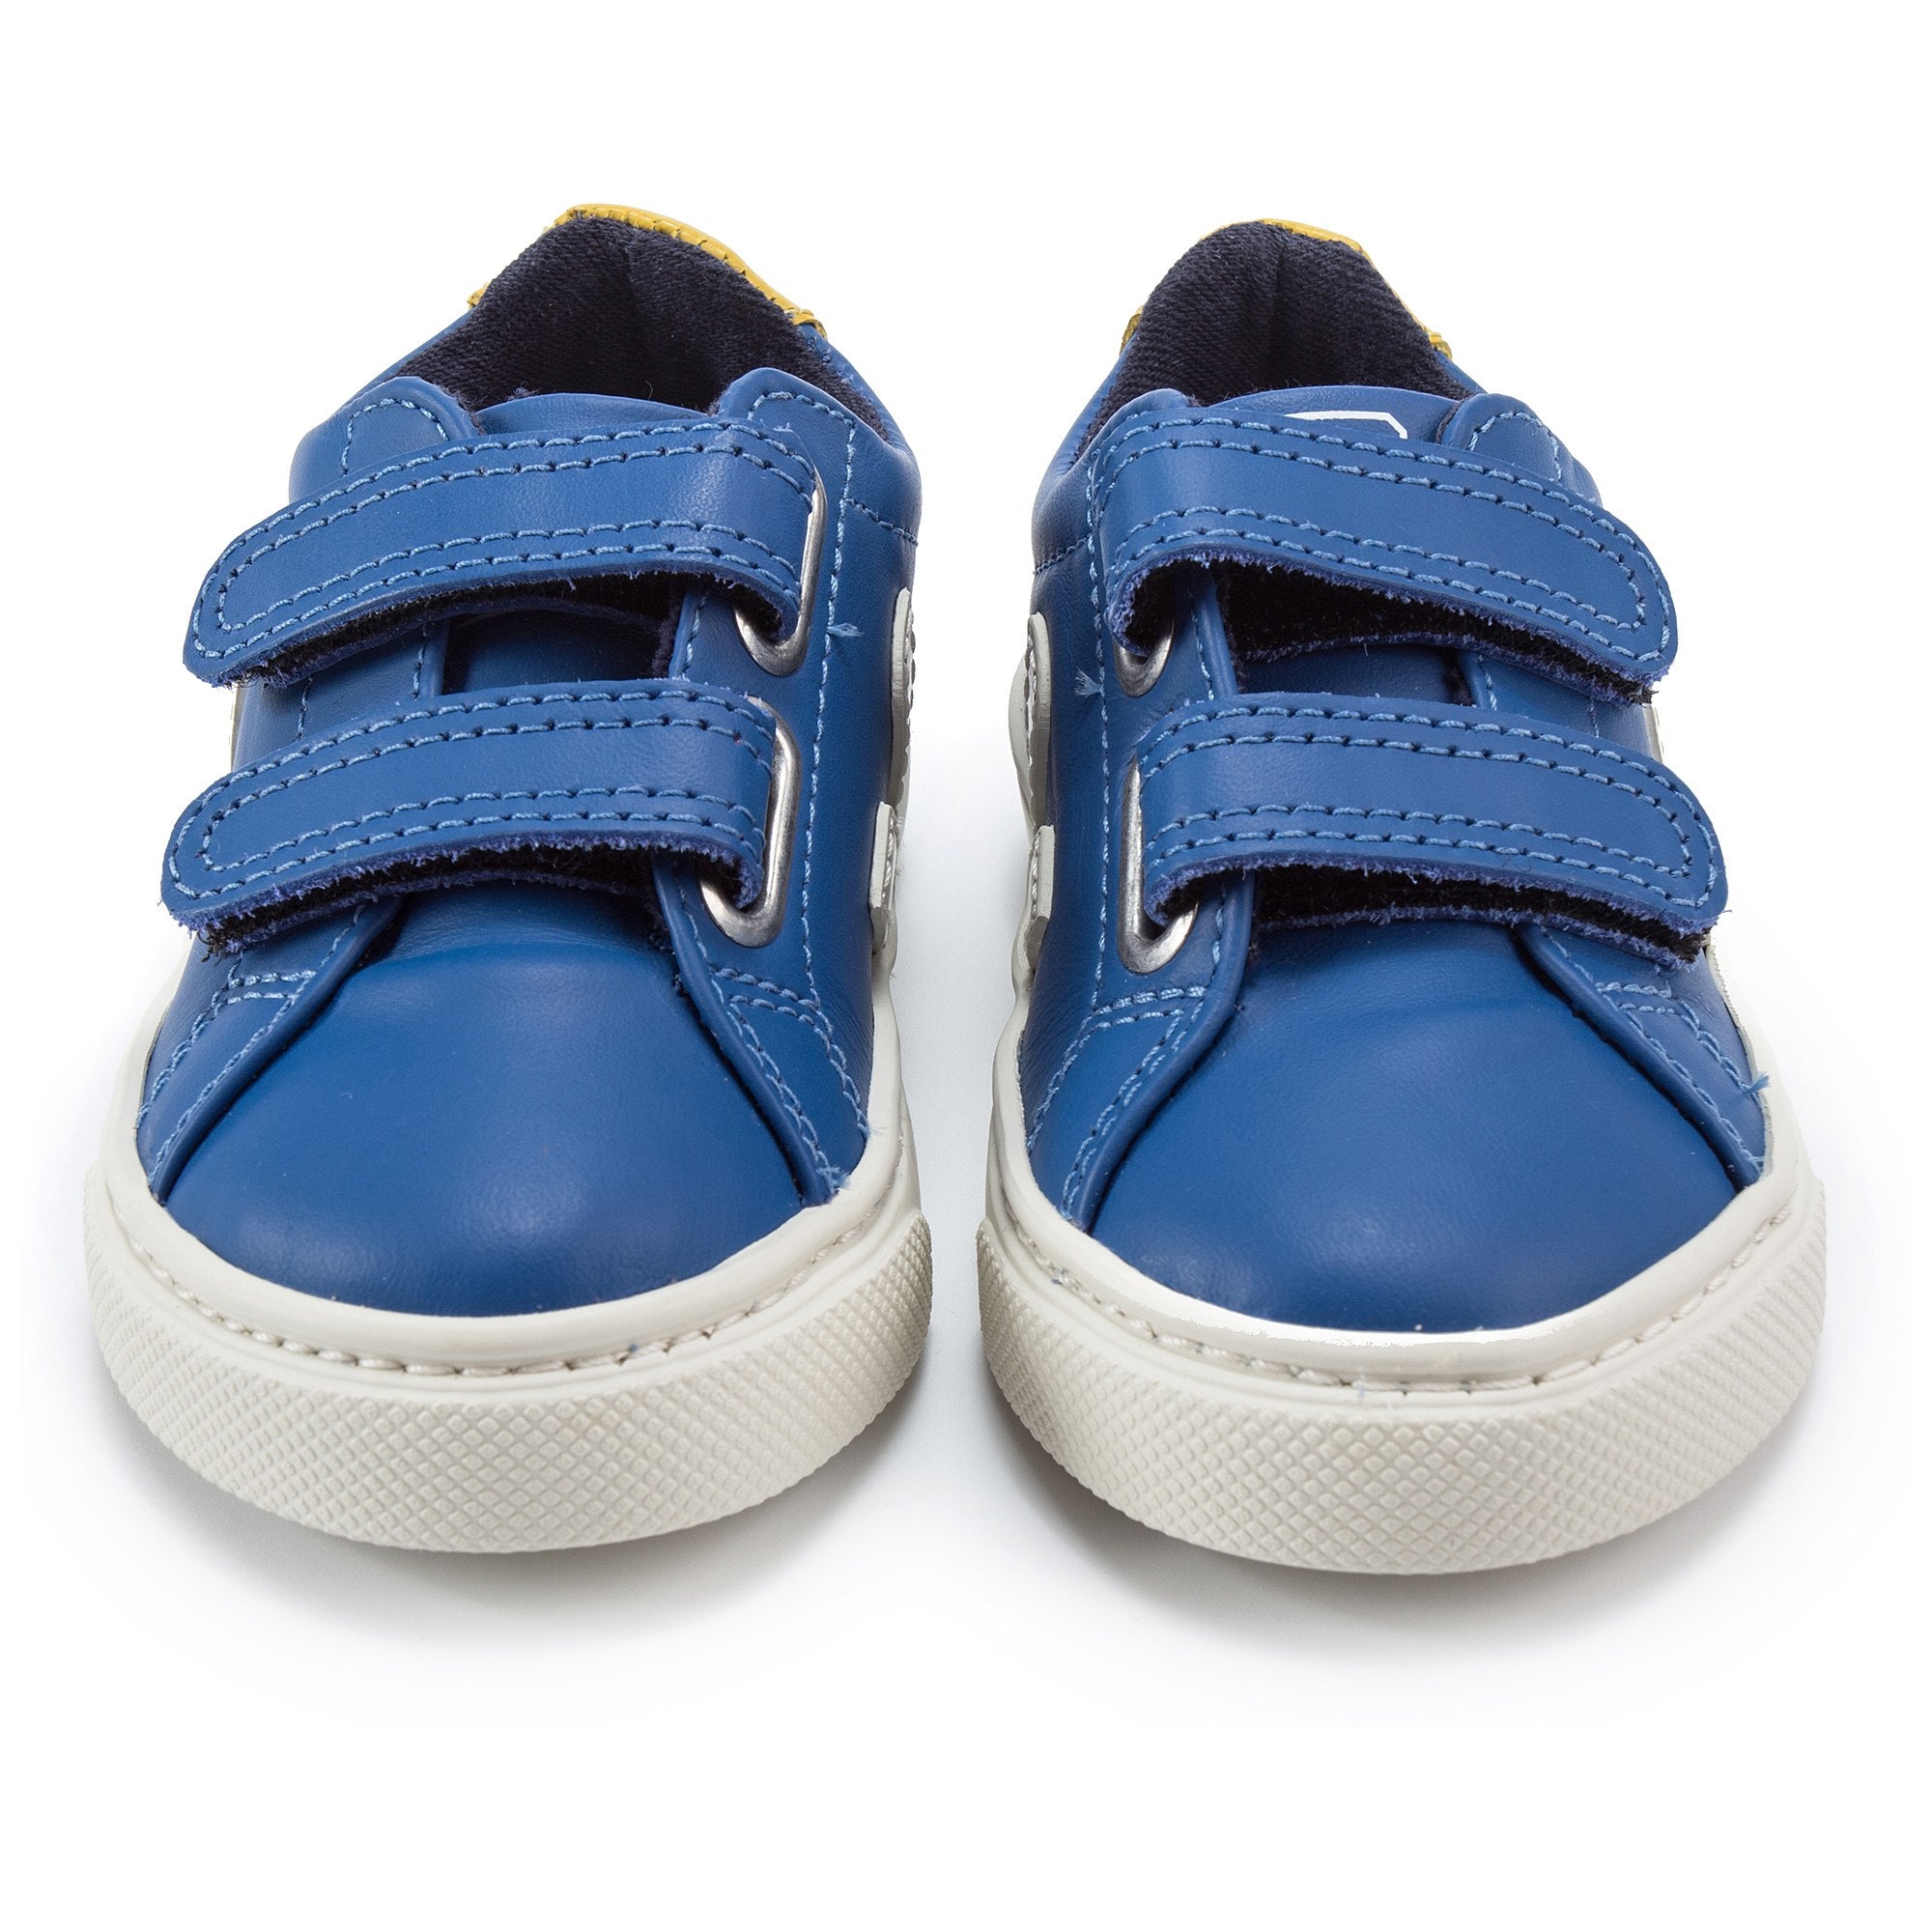 Boys Blue Leather Velcro Whit White "V" Shoes